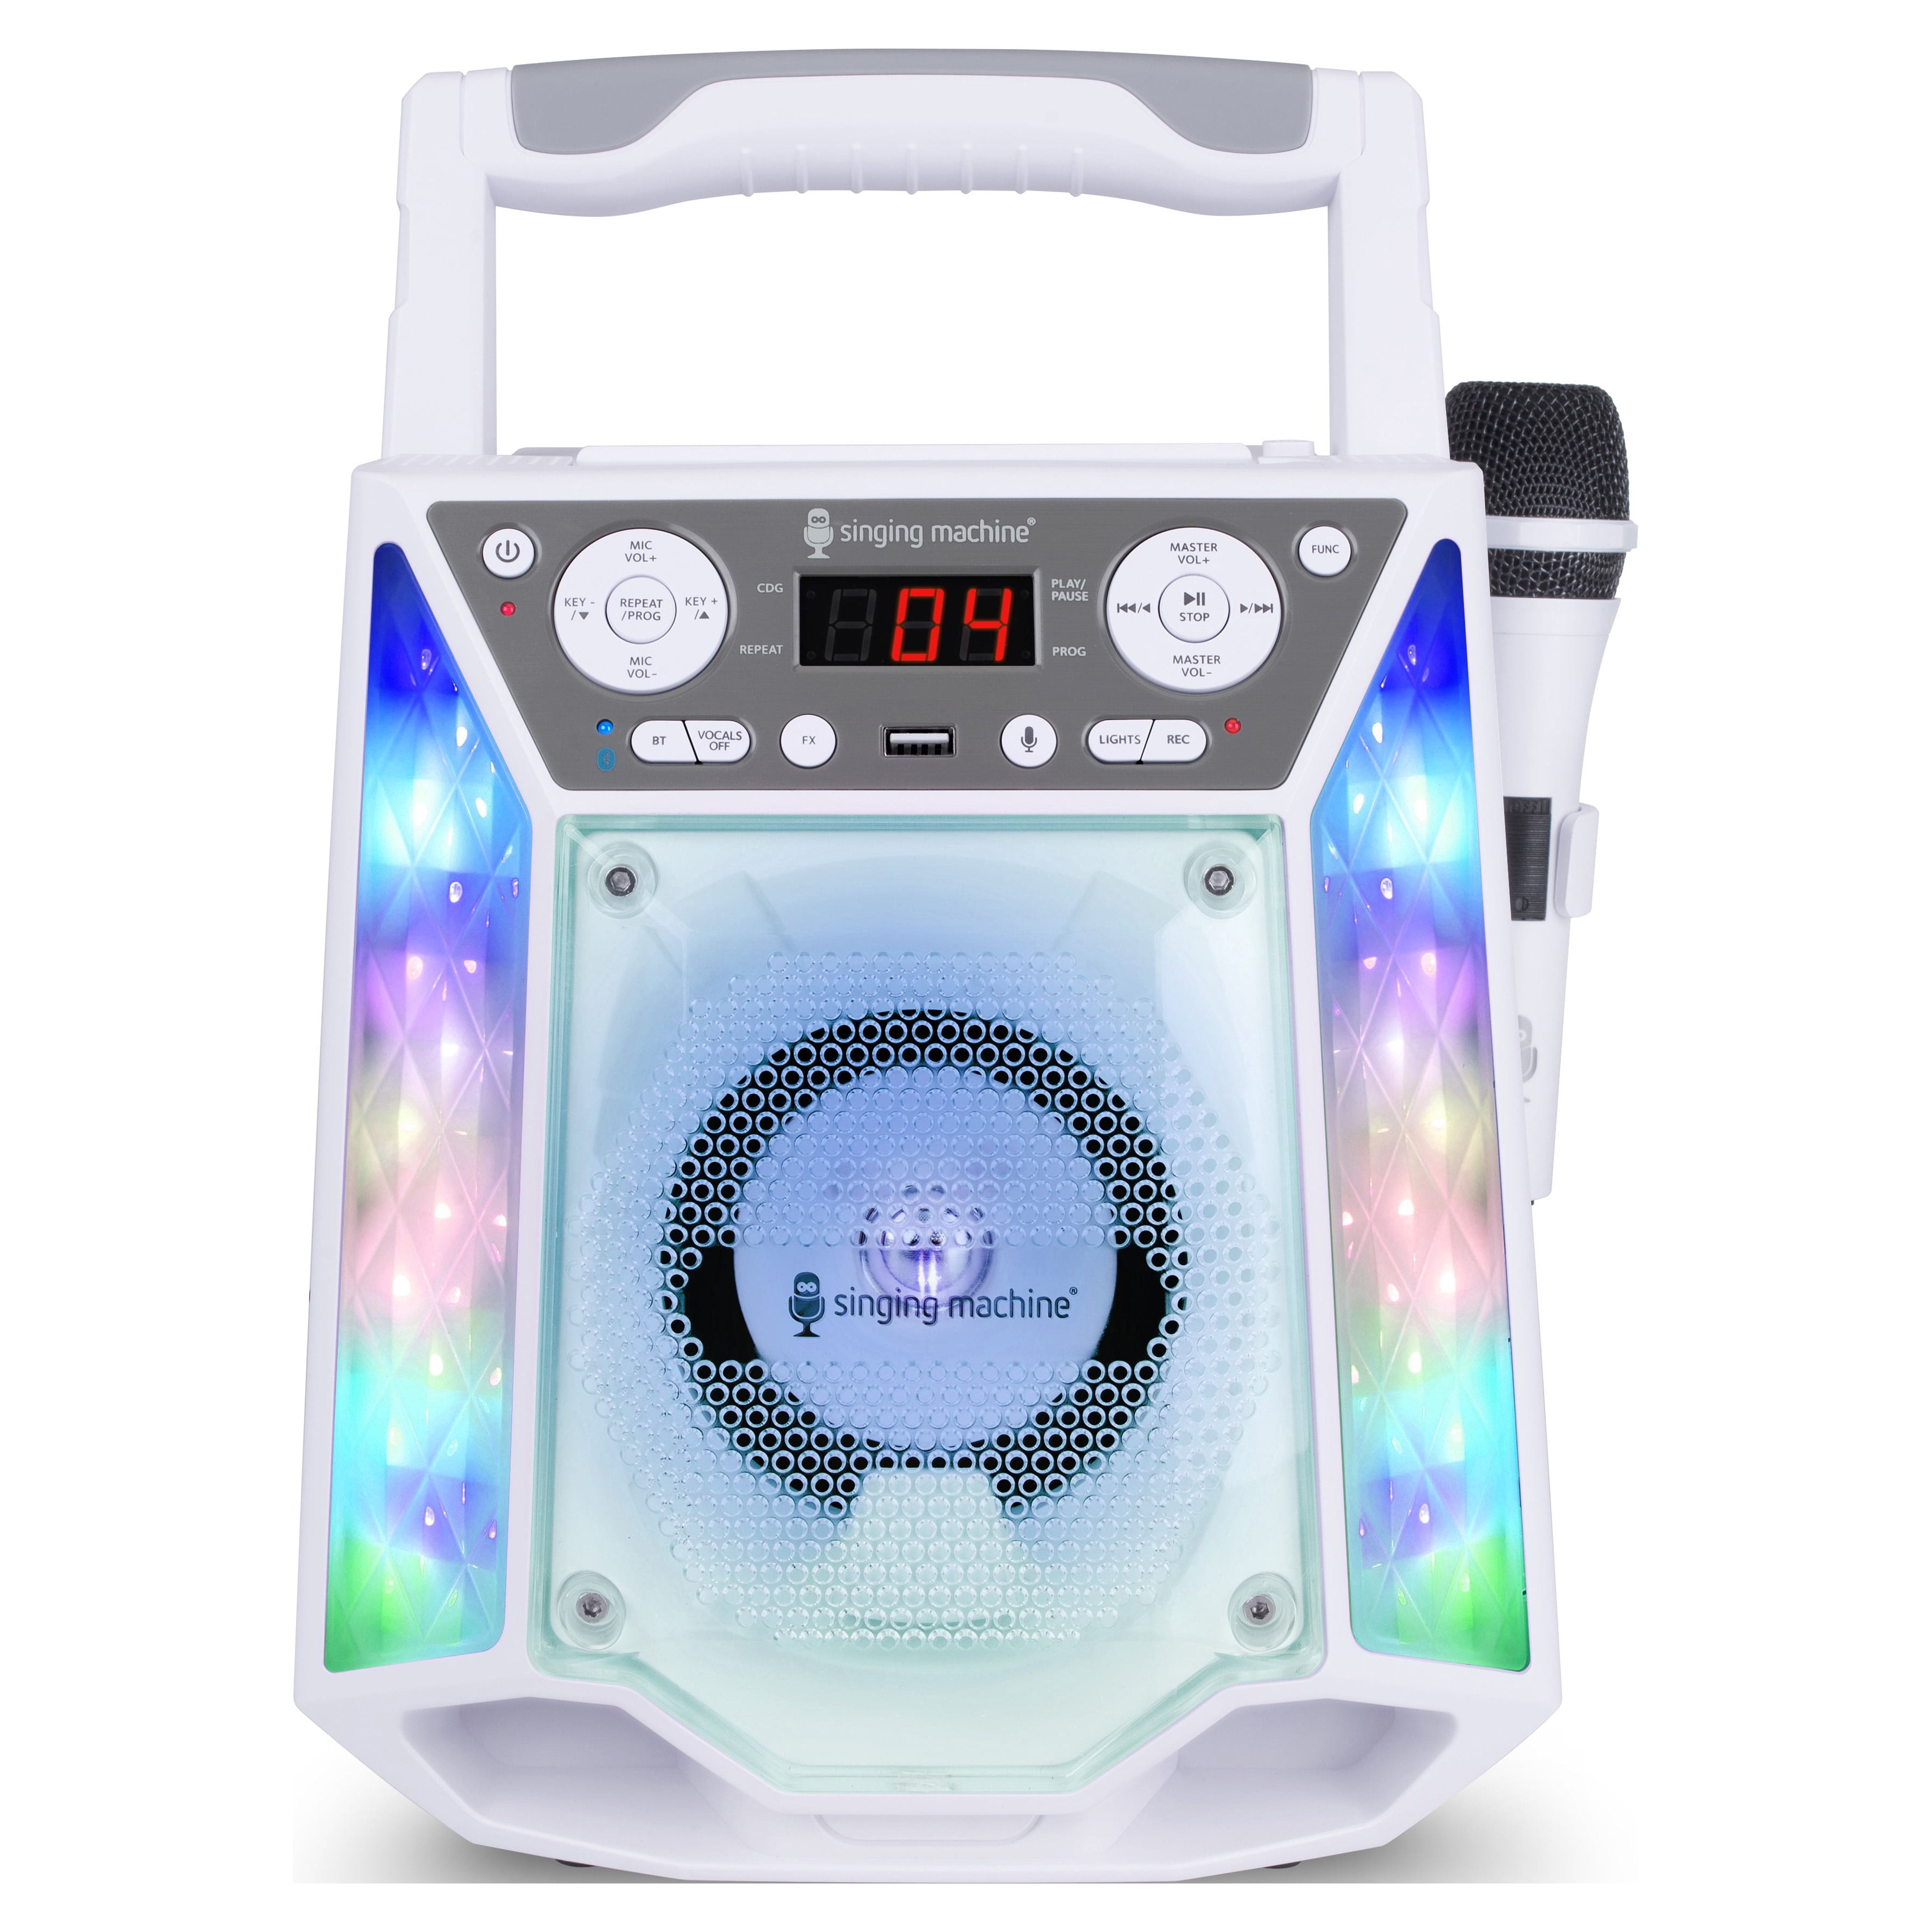 The Singing Machine Shine Voice SML2350 Karaoke Machine with Voice